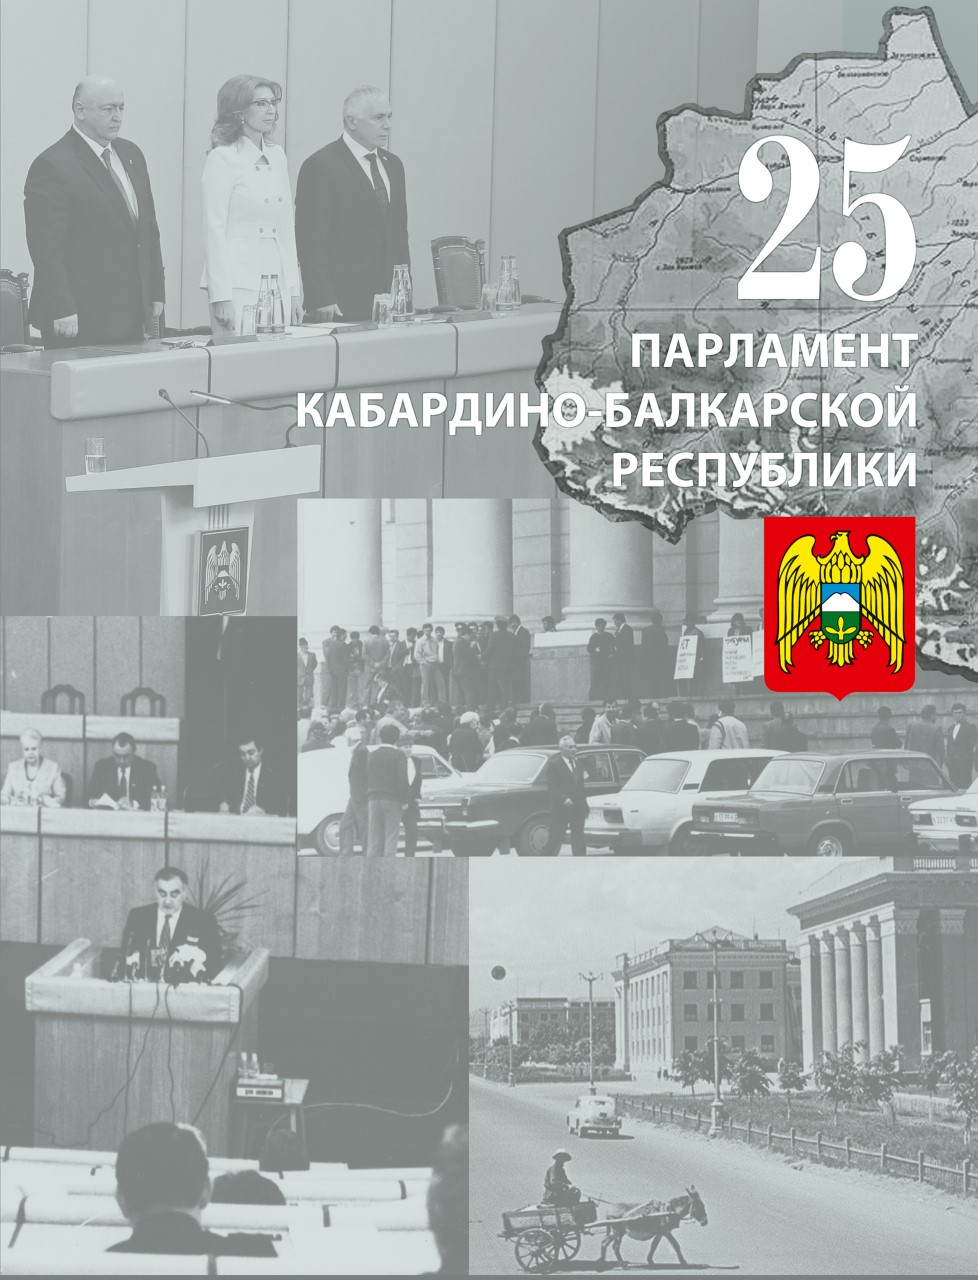 В Нальчике вышла книга к юбилею парламента КБР